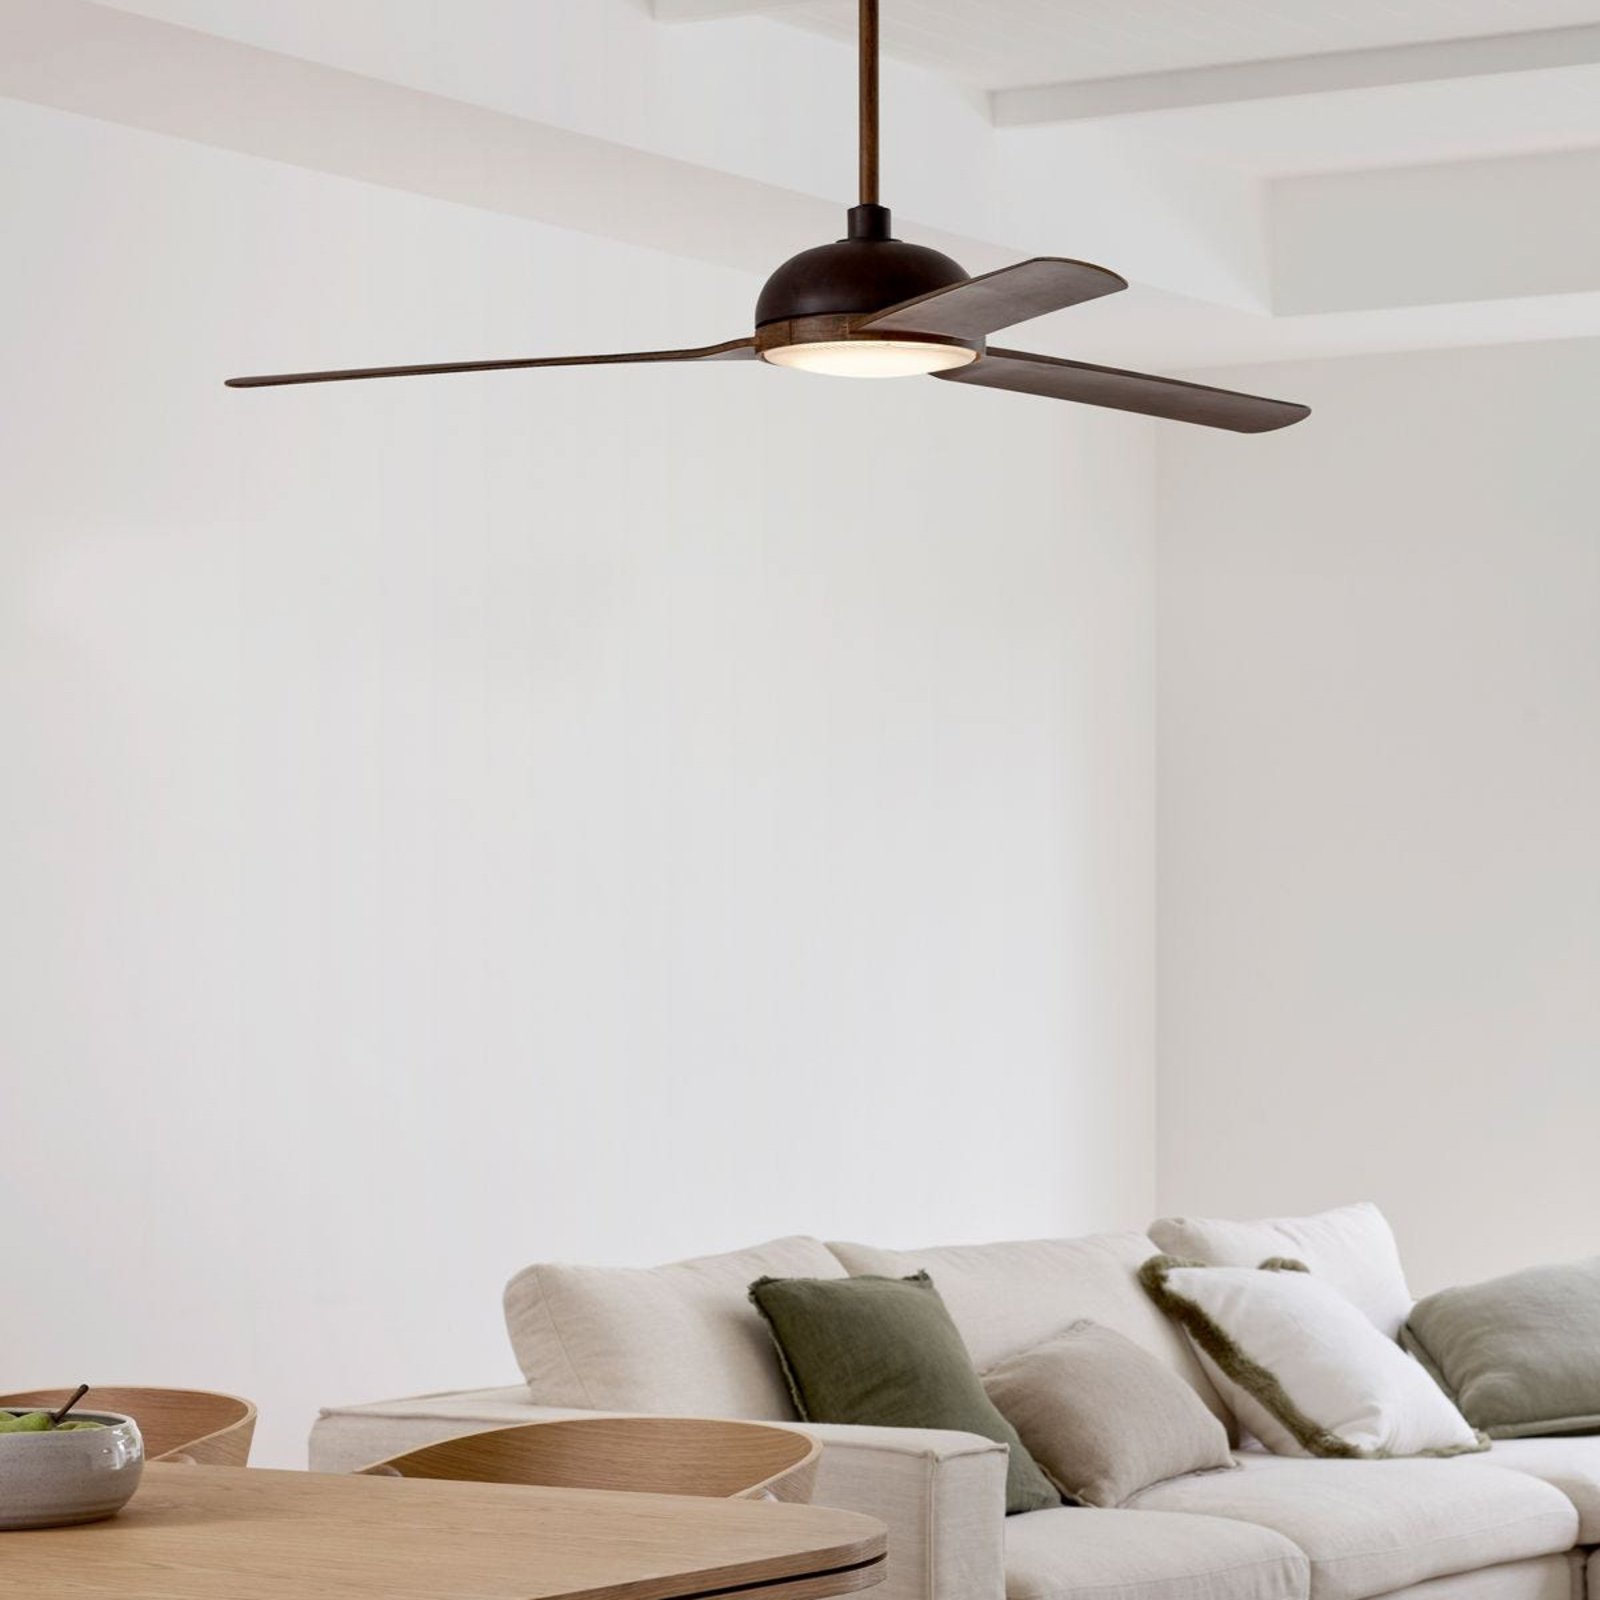 Beacon ceiling fan with light Unione, bronze/koa, quiet